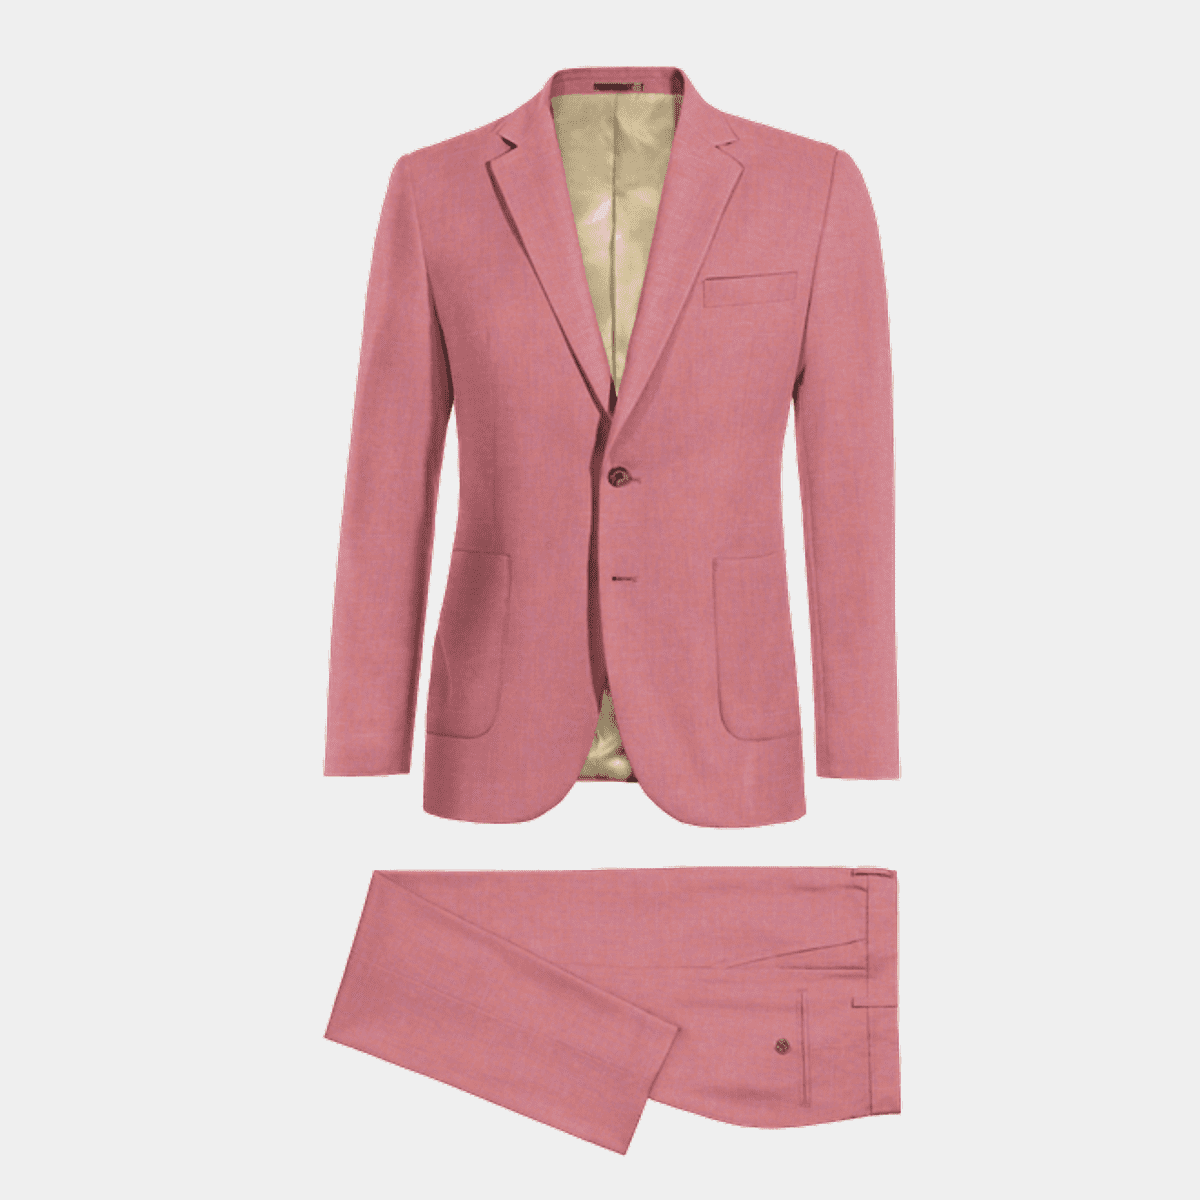 Suit - Blush on Garmentory